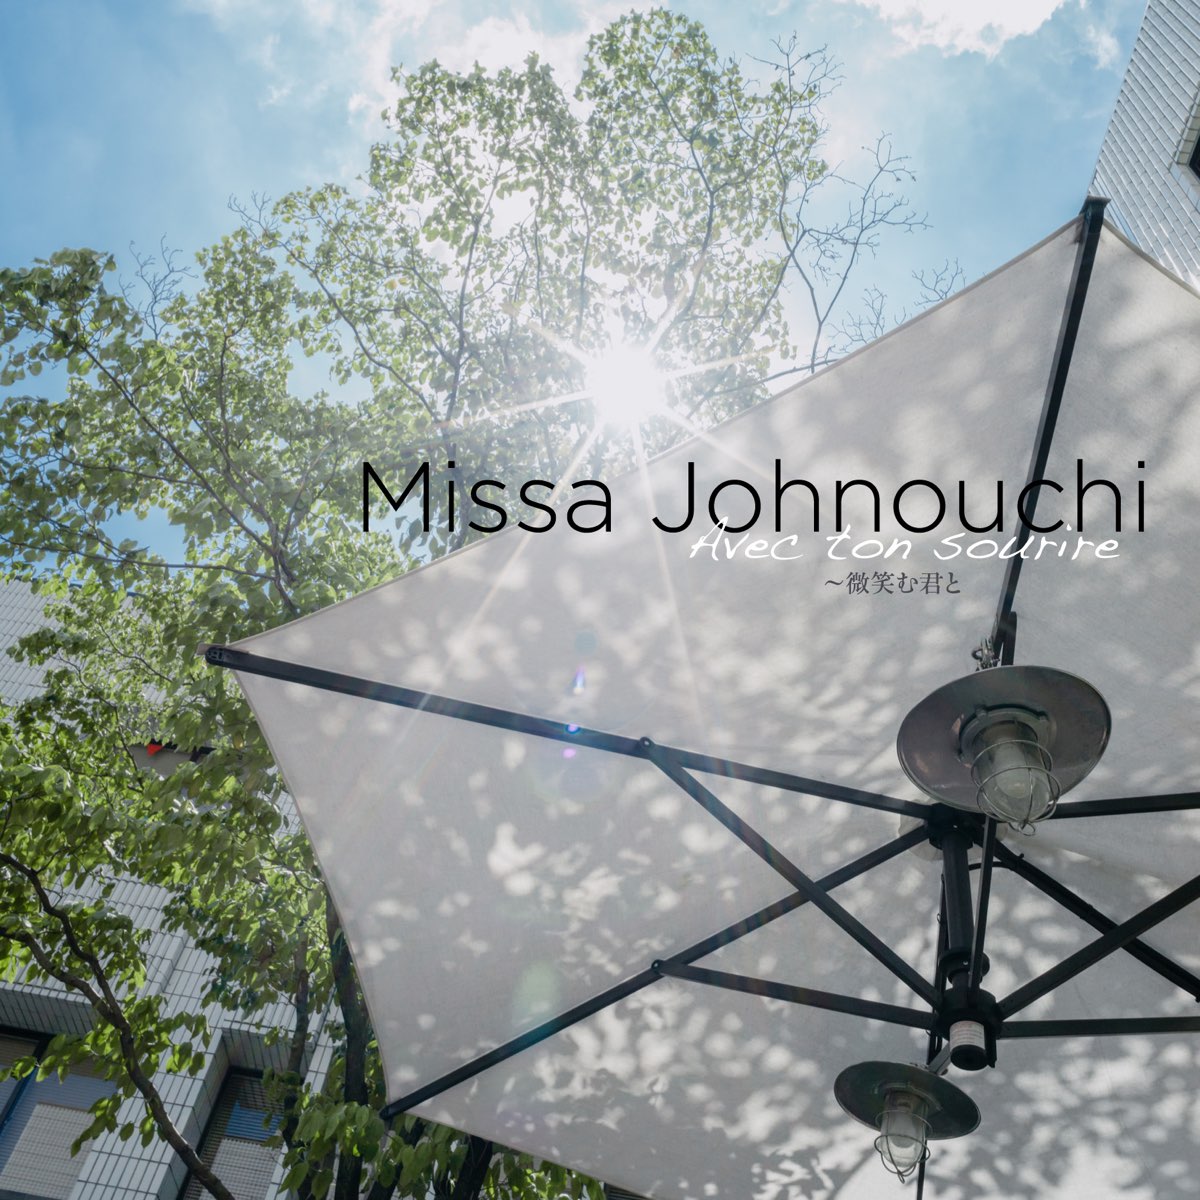 Avec ton sourire〜微笑む君と - Album by Missa Johnouchi - Apple Music